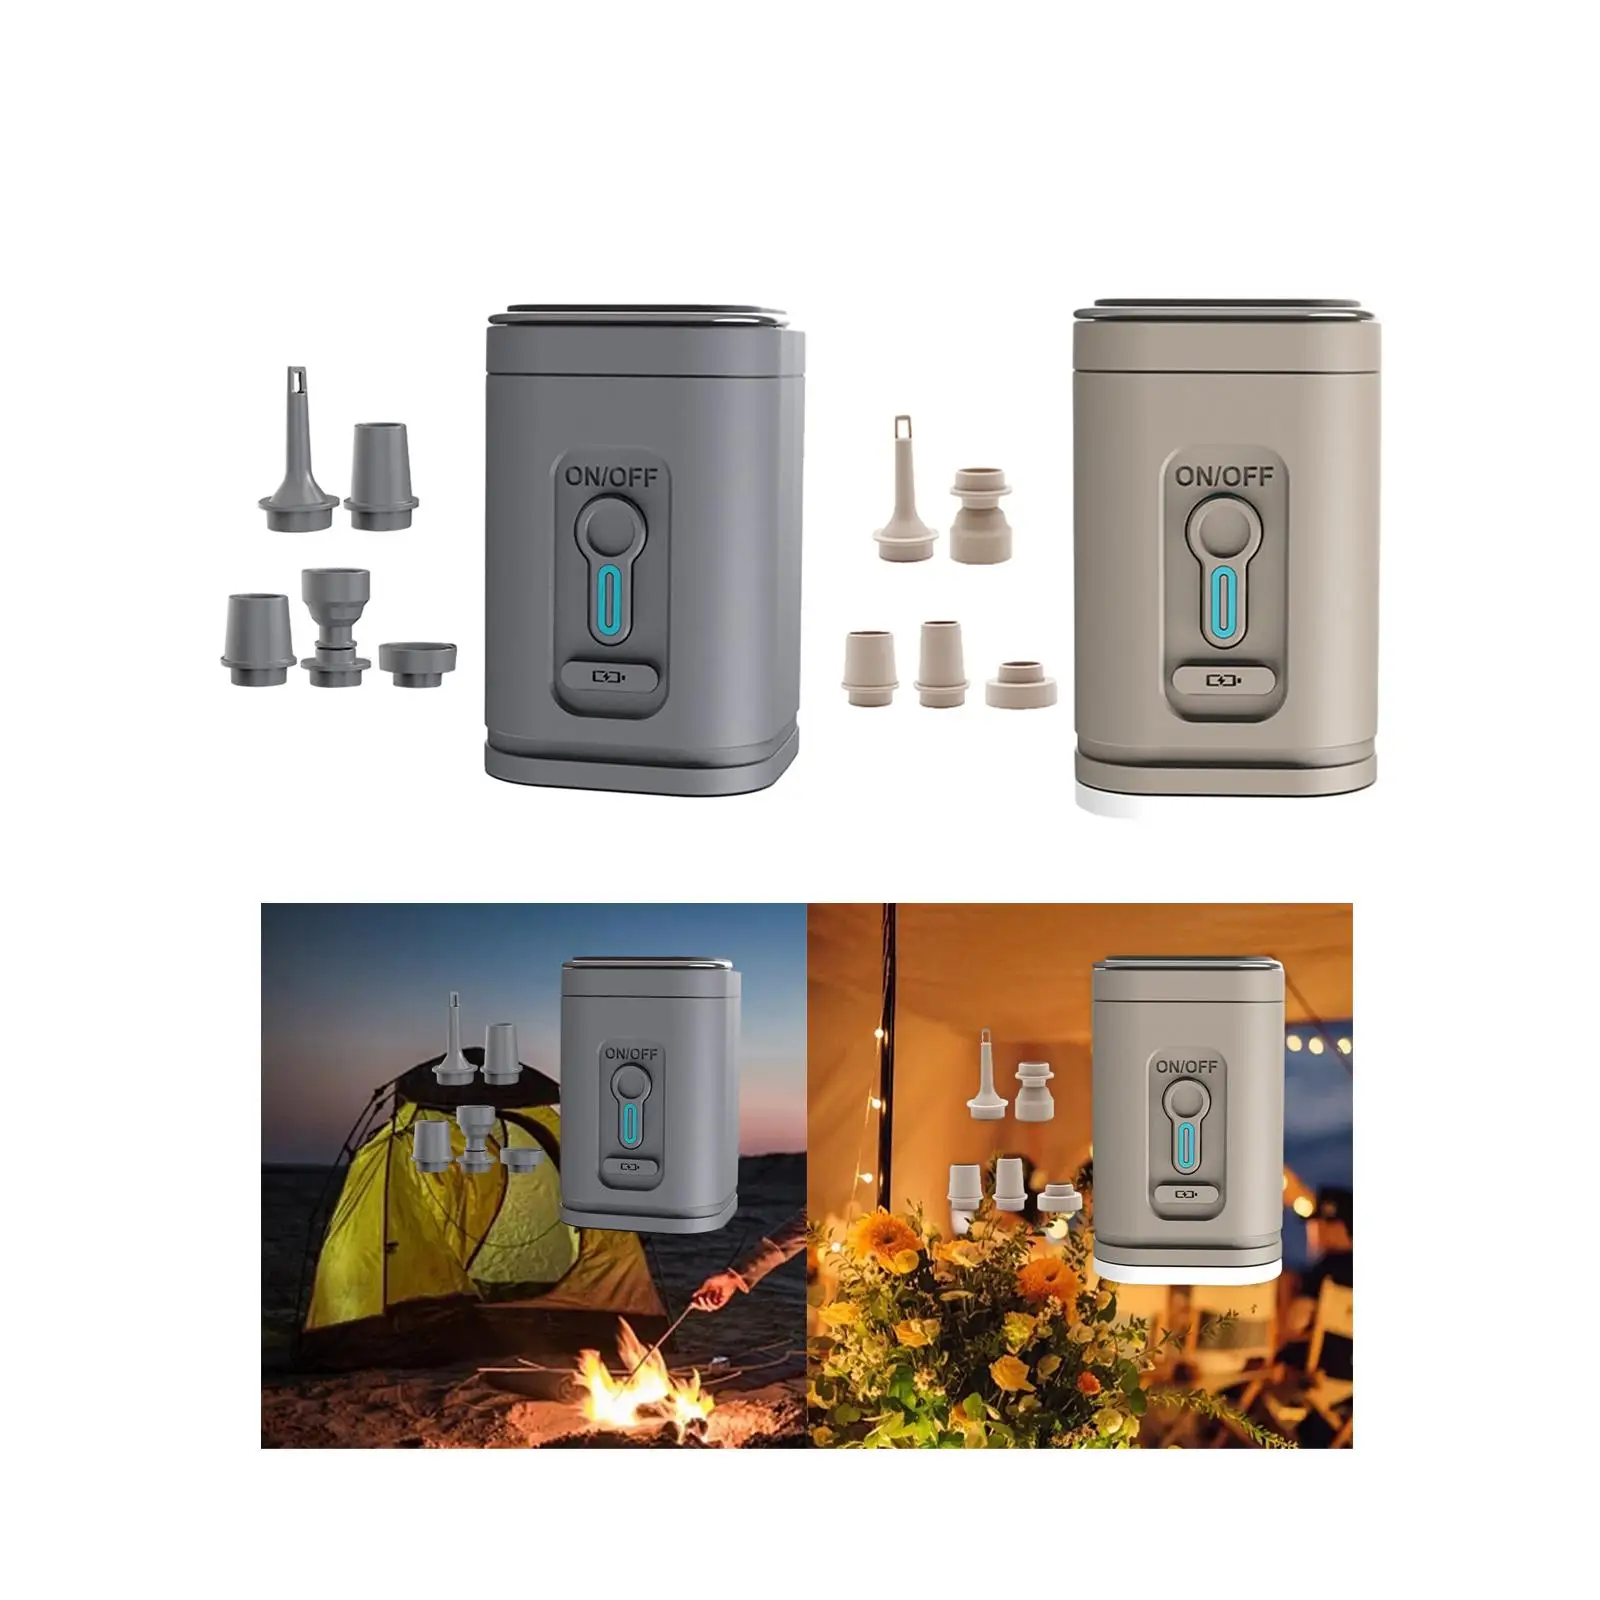 Mini Pump Inflate and Deflate Air Pump LED Lighting Compact Electric Air Pump